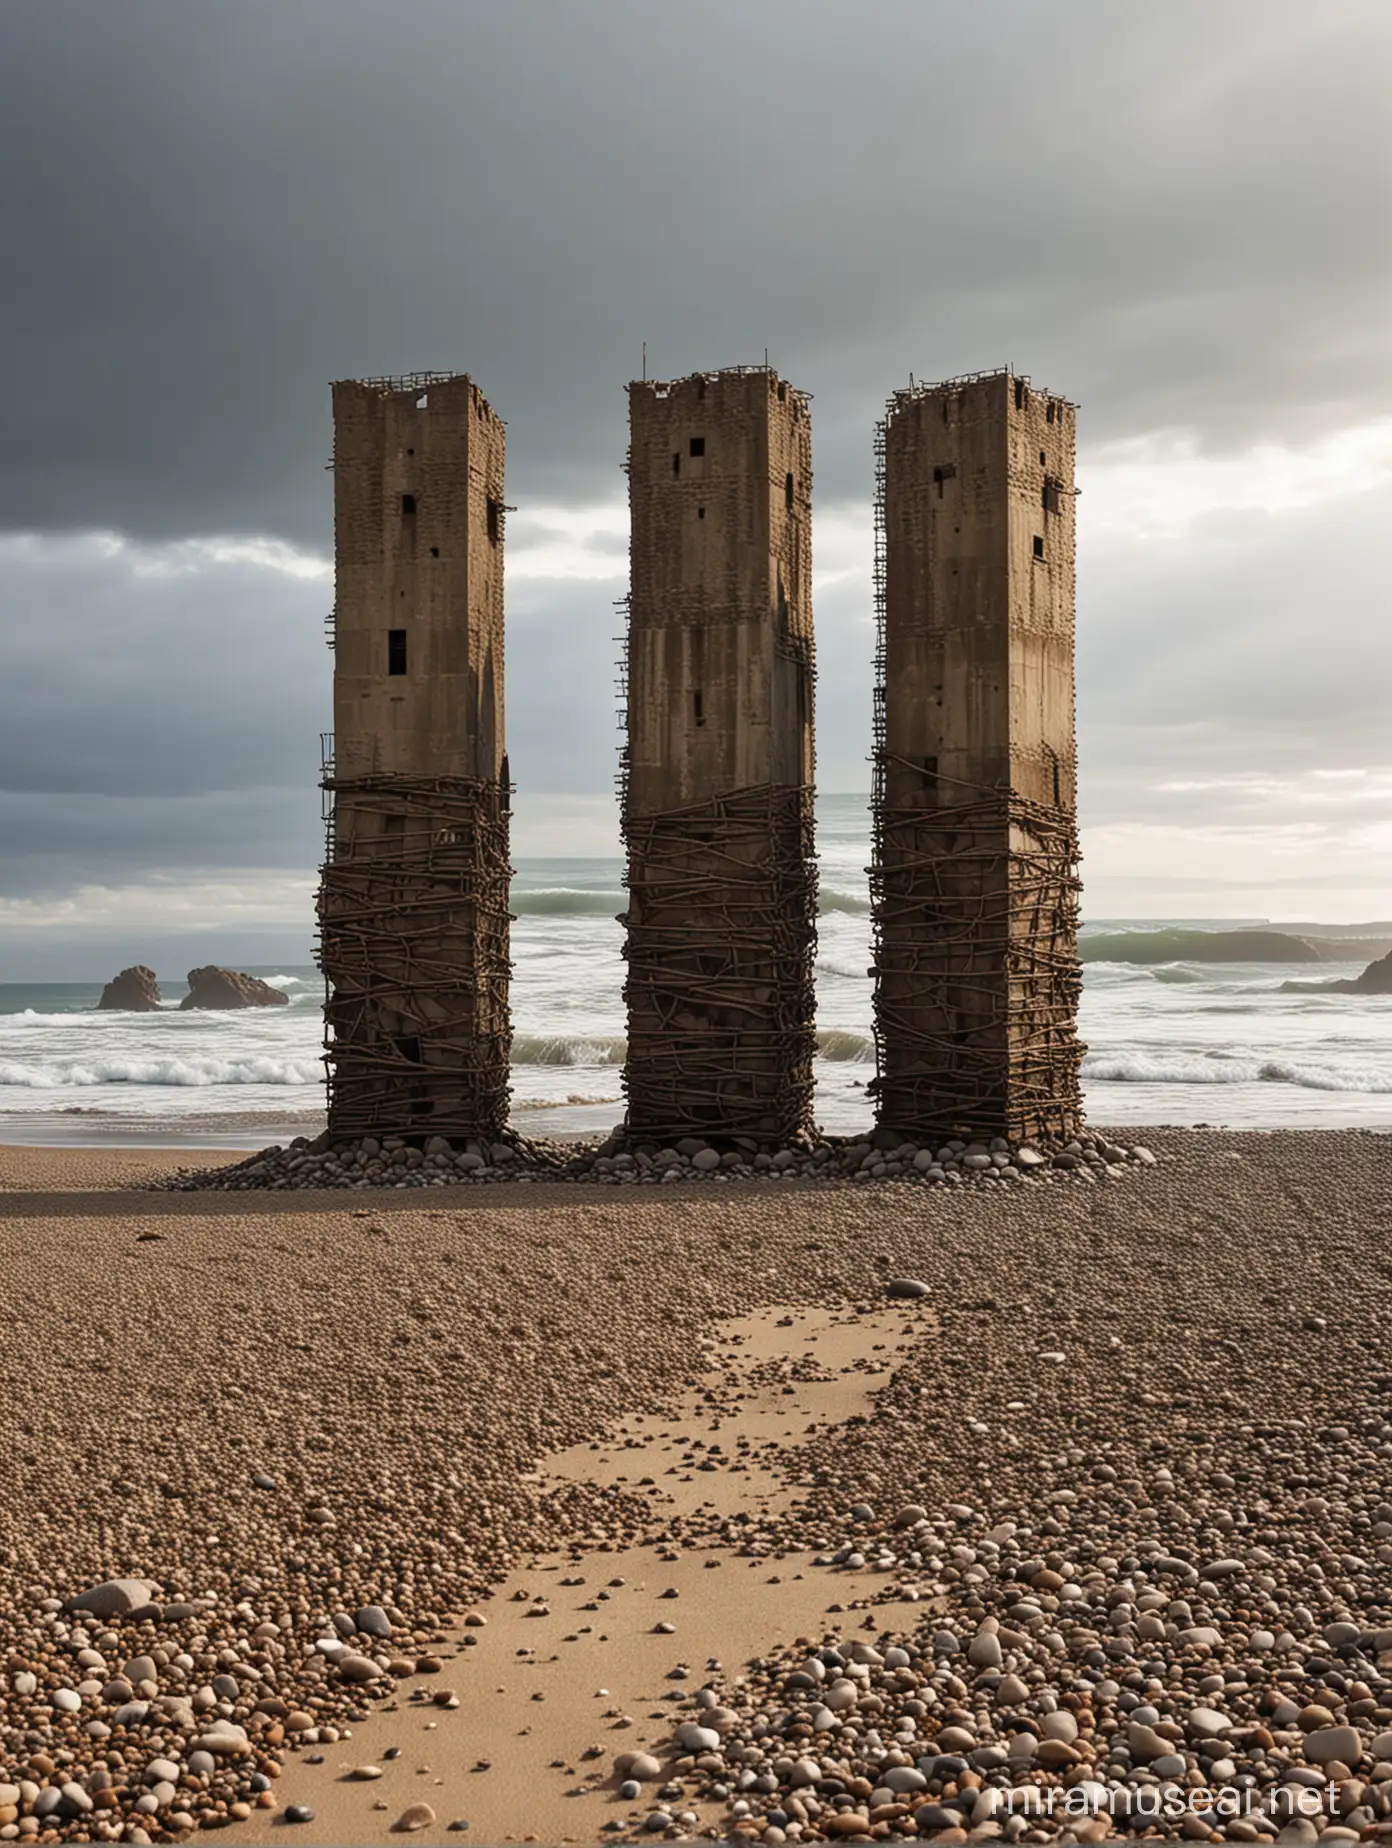 Abandoned Metal Towers on Windswept Beach Atmospheric Coastal Scene